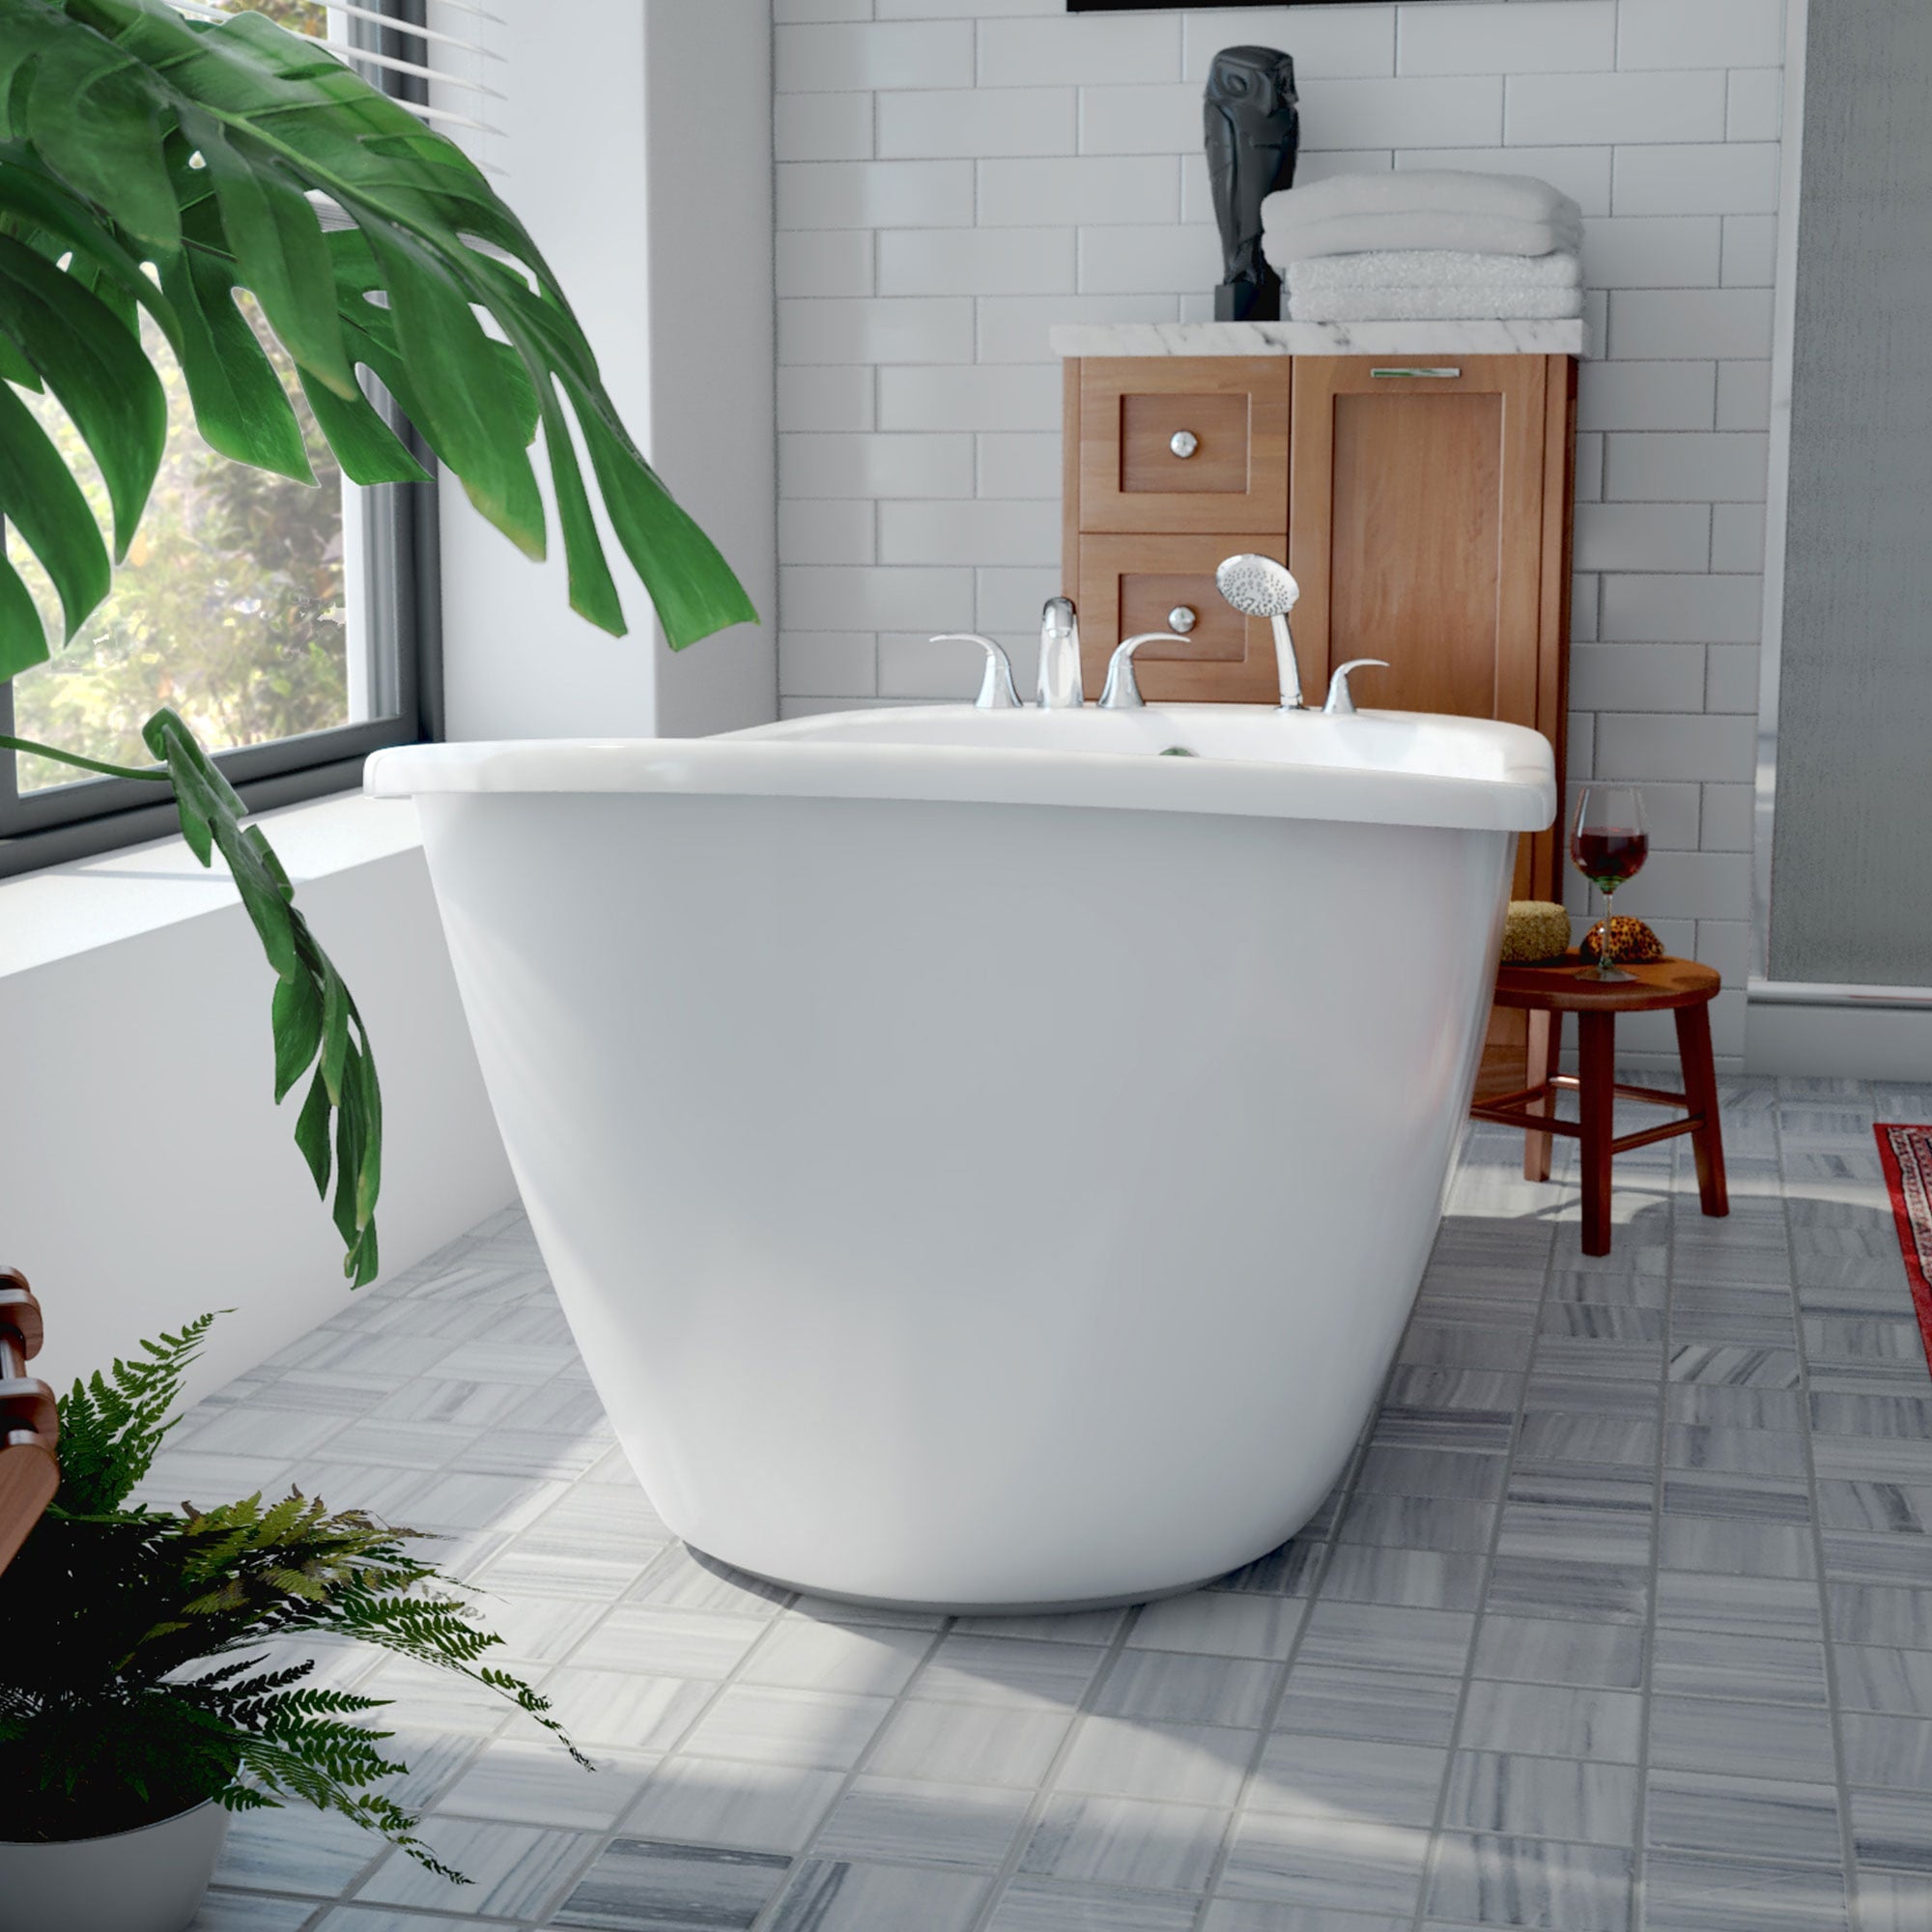 Freestanding bathtub Corsan E030 Mono Chrome \ 170 cm \ Without a shelf, Products \ Bathtubs \ Freestanding (wall) bathtubs